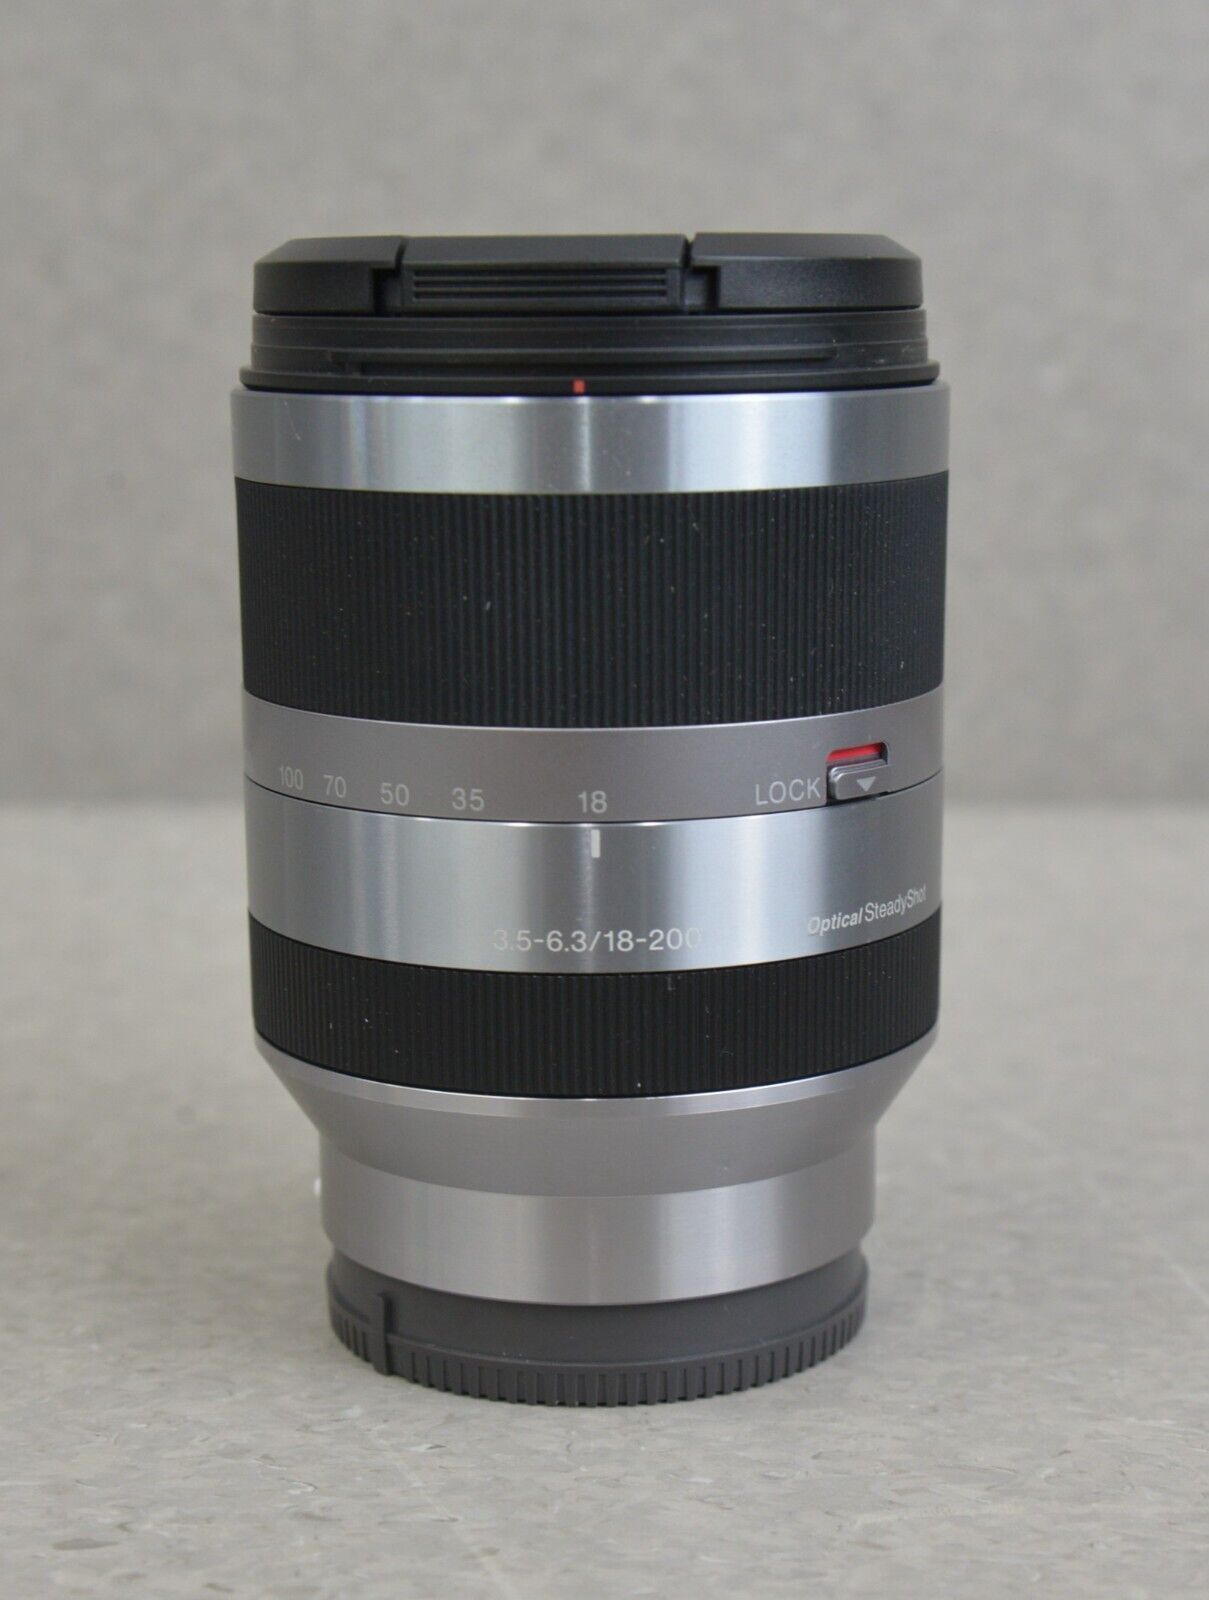 Sony SEL18200 Optical SteadyShot F3.5-6.3 E18-200 OSS E-Mount Camera Lens